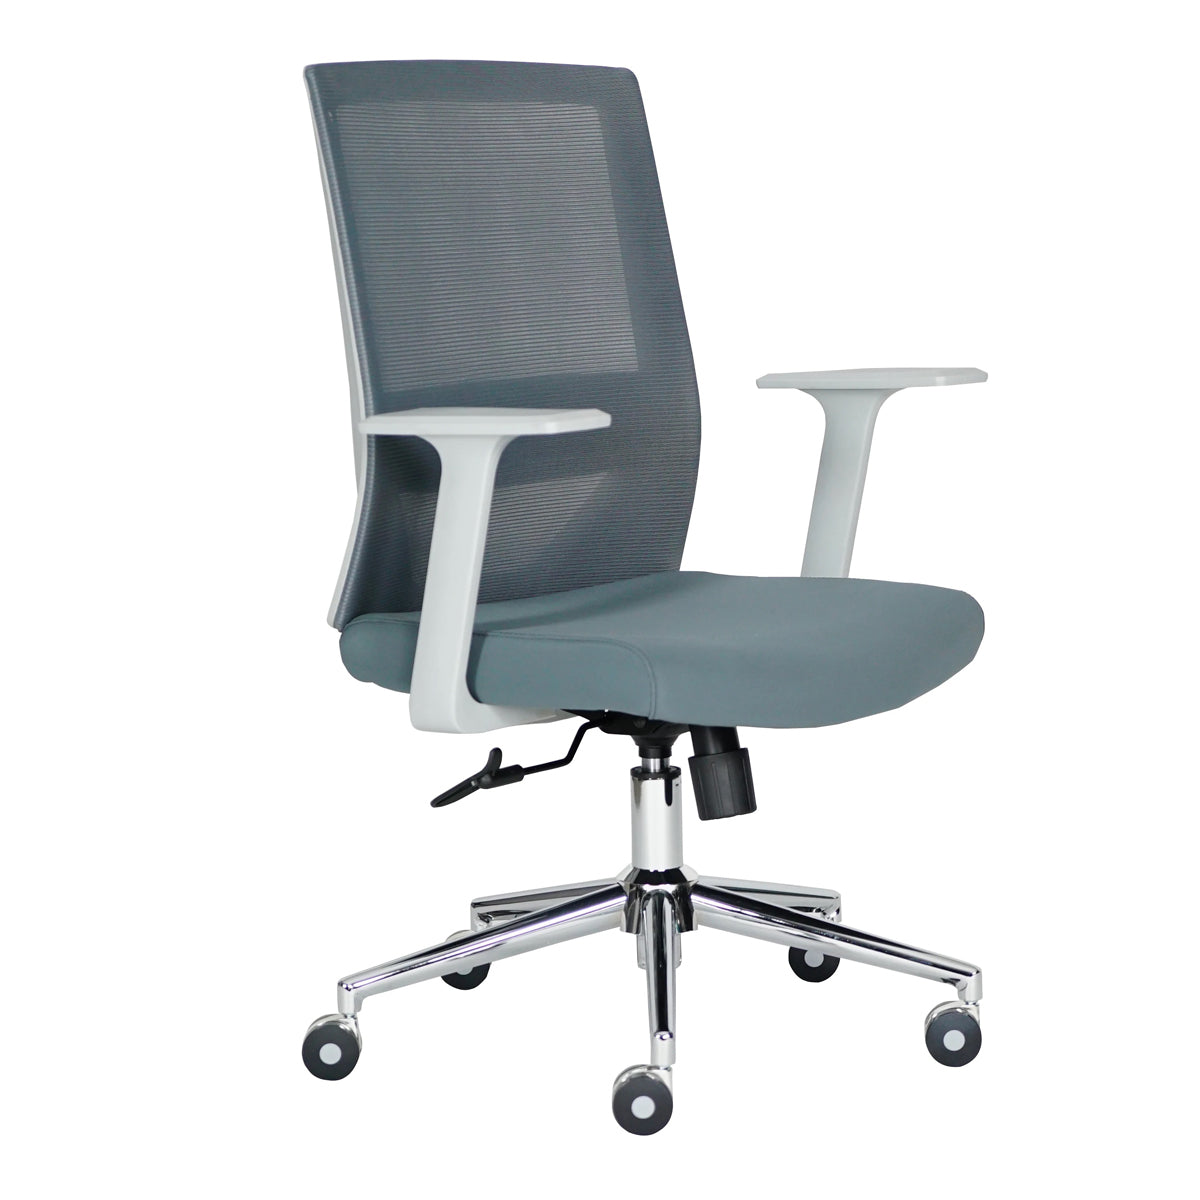 Sillón operativo Vision respaldo bajo tapizado en mesh y asiento en tela gris con base aluminio